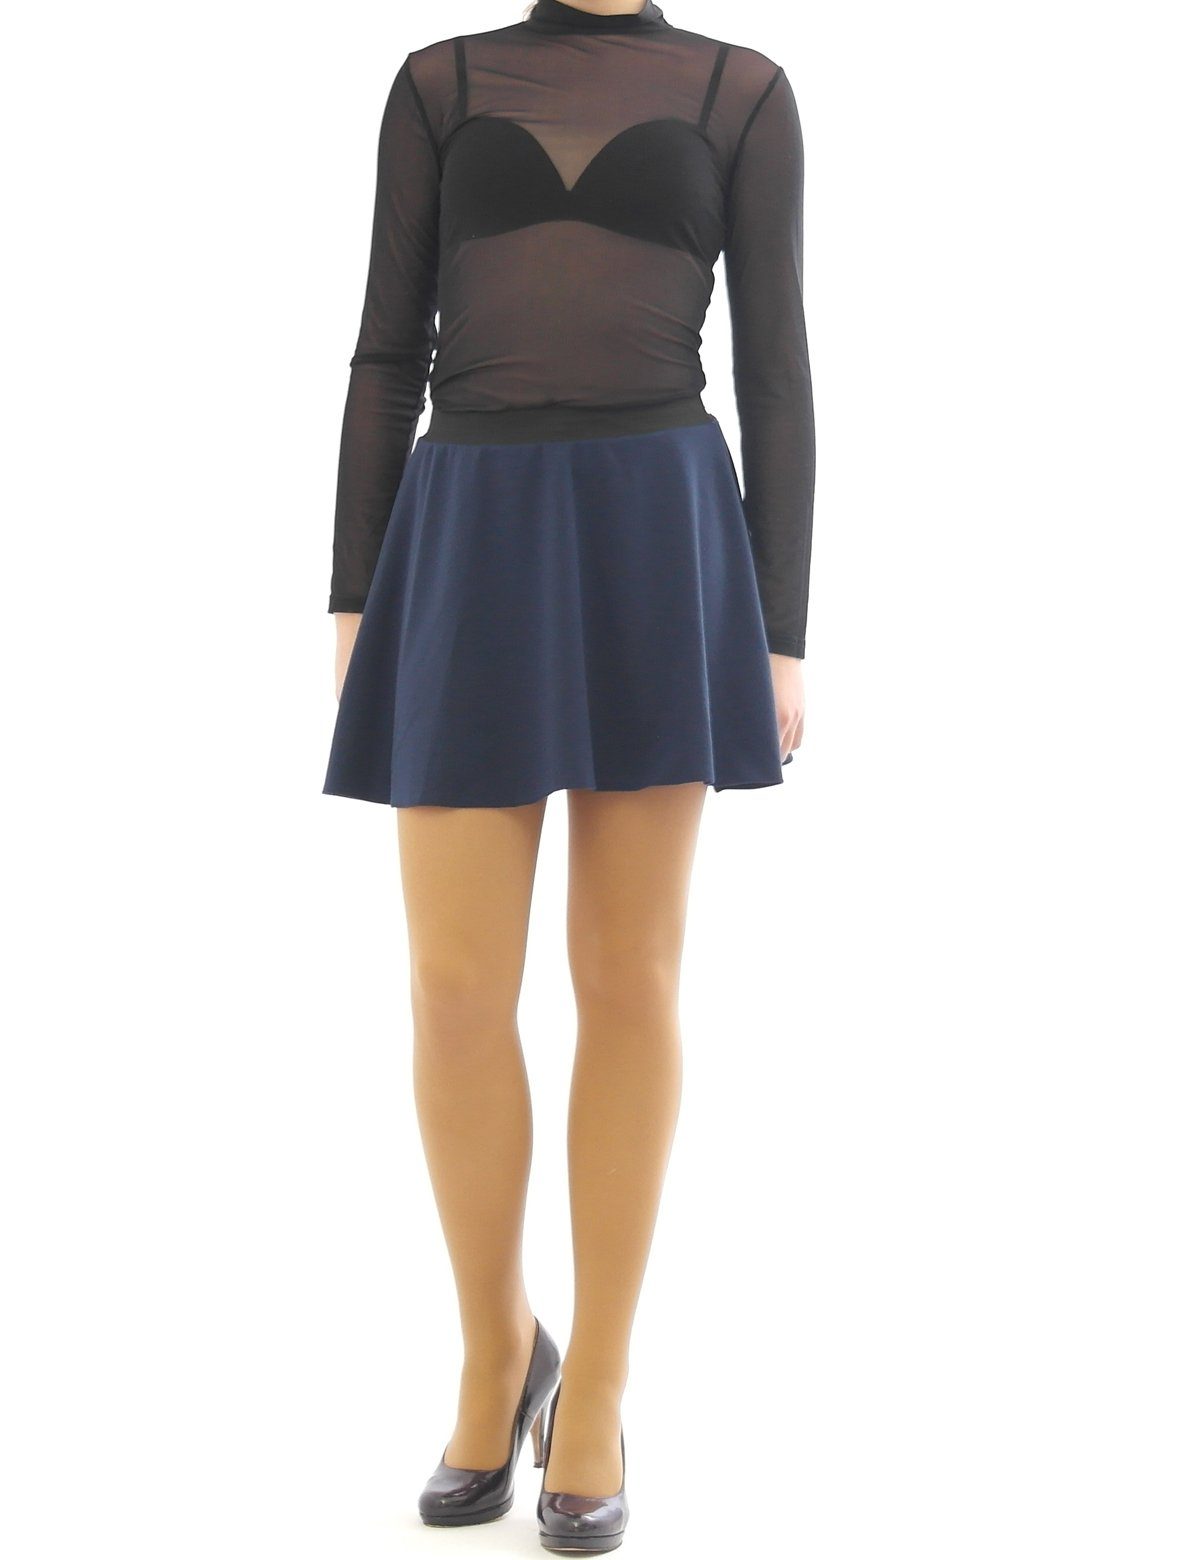 Gummibund Falten-Rock Swing hohe Rock dunkelblau SYS Mini Minirock Taille Minirock Skirt